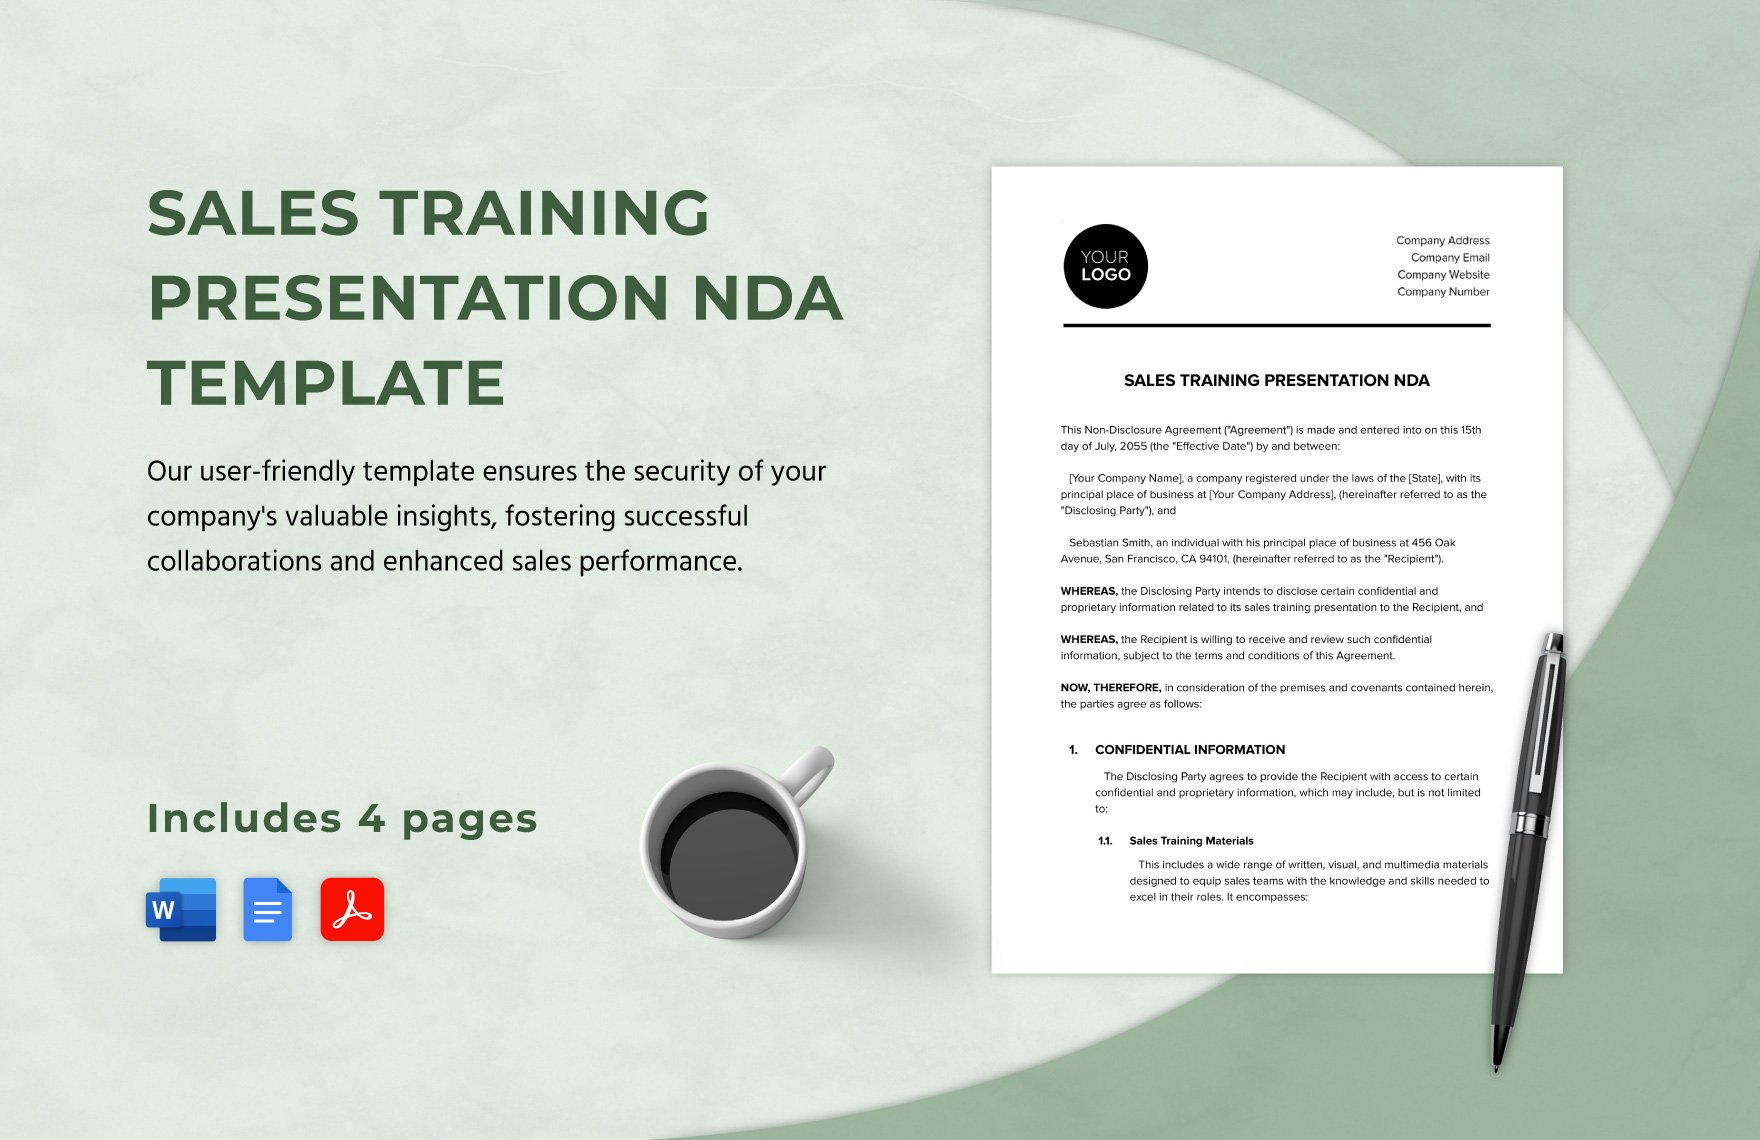 Sales Training Presentation NDA Template in Word, Google Docs, PDF